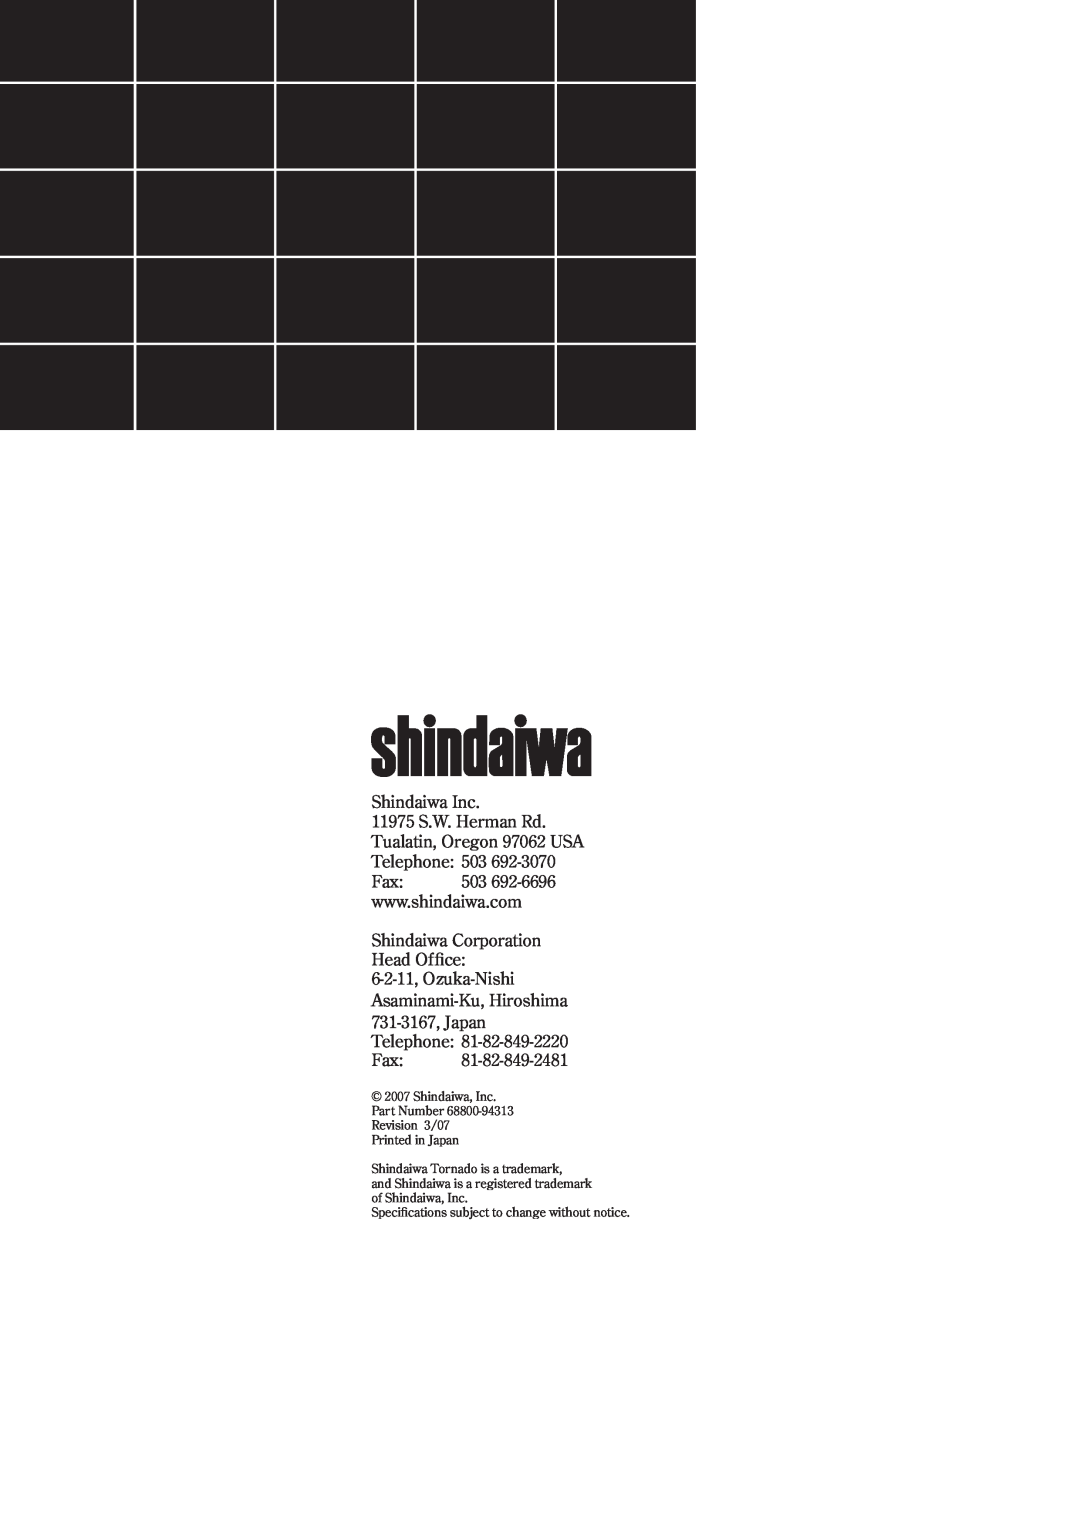 Shindaiwa AHS2510, 68800-94313 manual Shindaiwa Inc 11975 S.W. Herman Rd Tualatin, Oregon 97062 USA, Telephone 